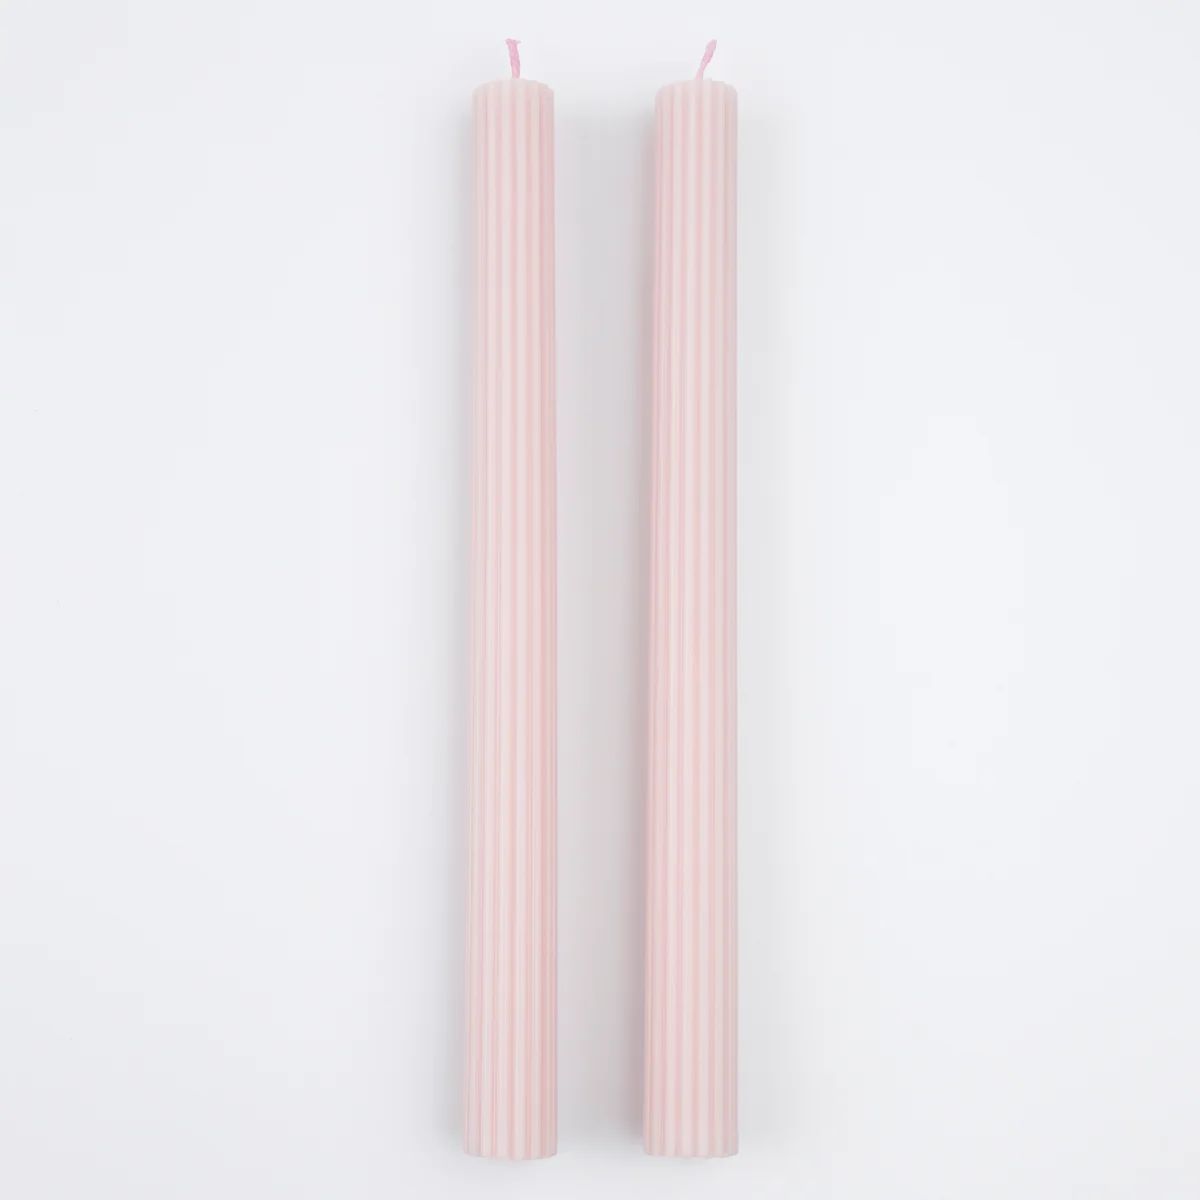 Cotton Candy Pink Table Candles (x 2) | Meri Meri